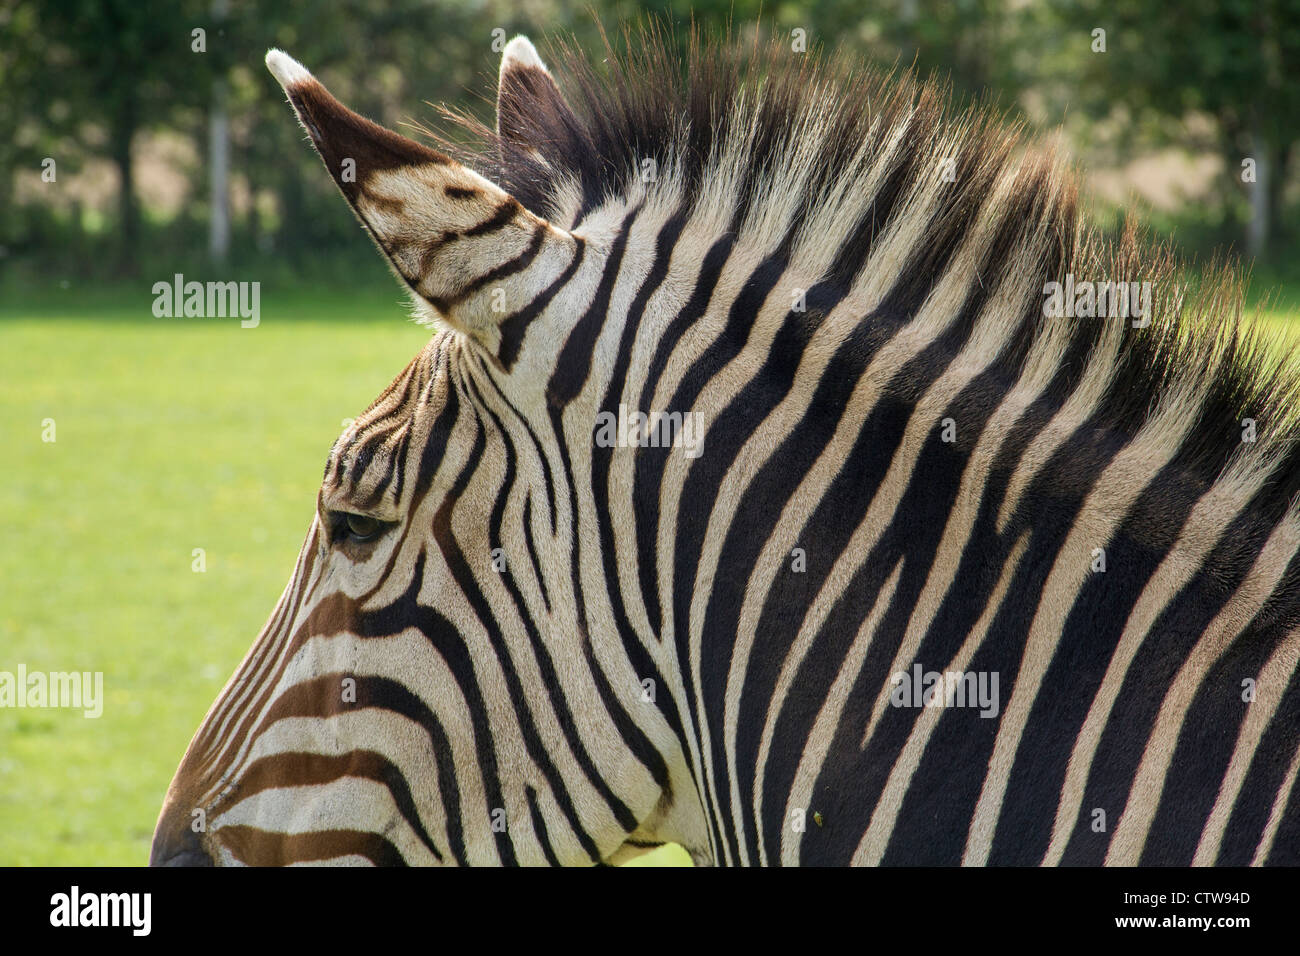 A zebras face seen up close Stock Photo